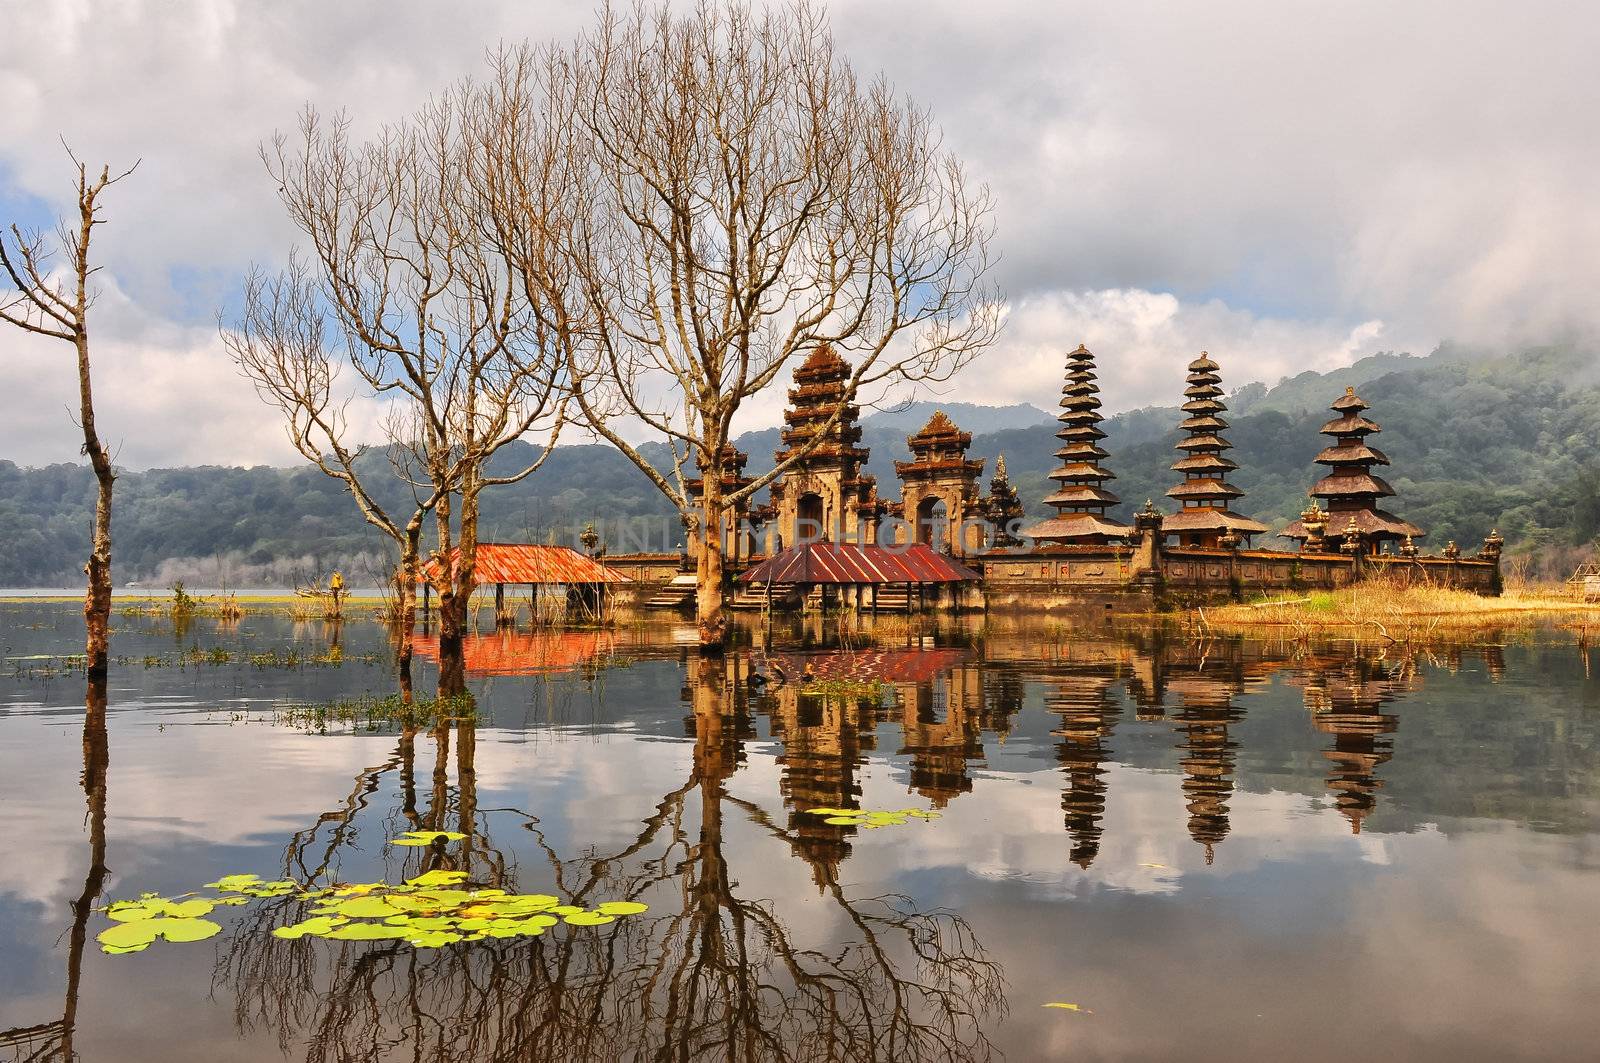 Balinese temple on Tamblingan lake by martinm303